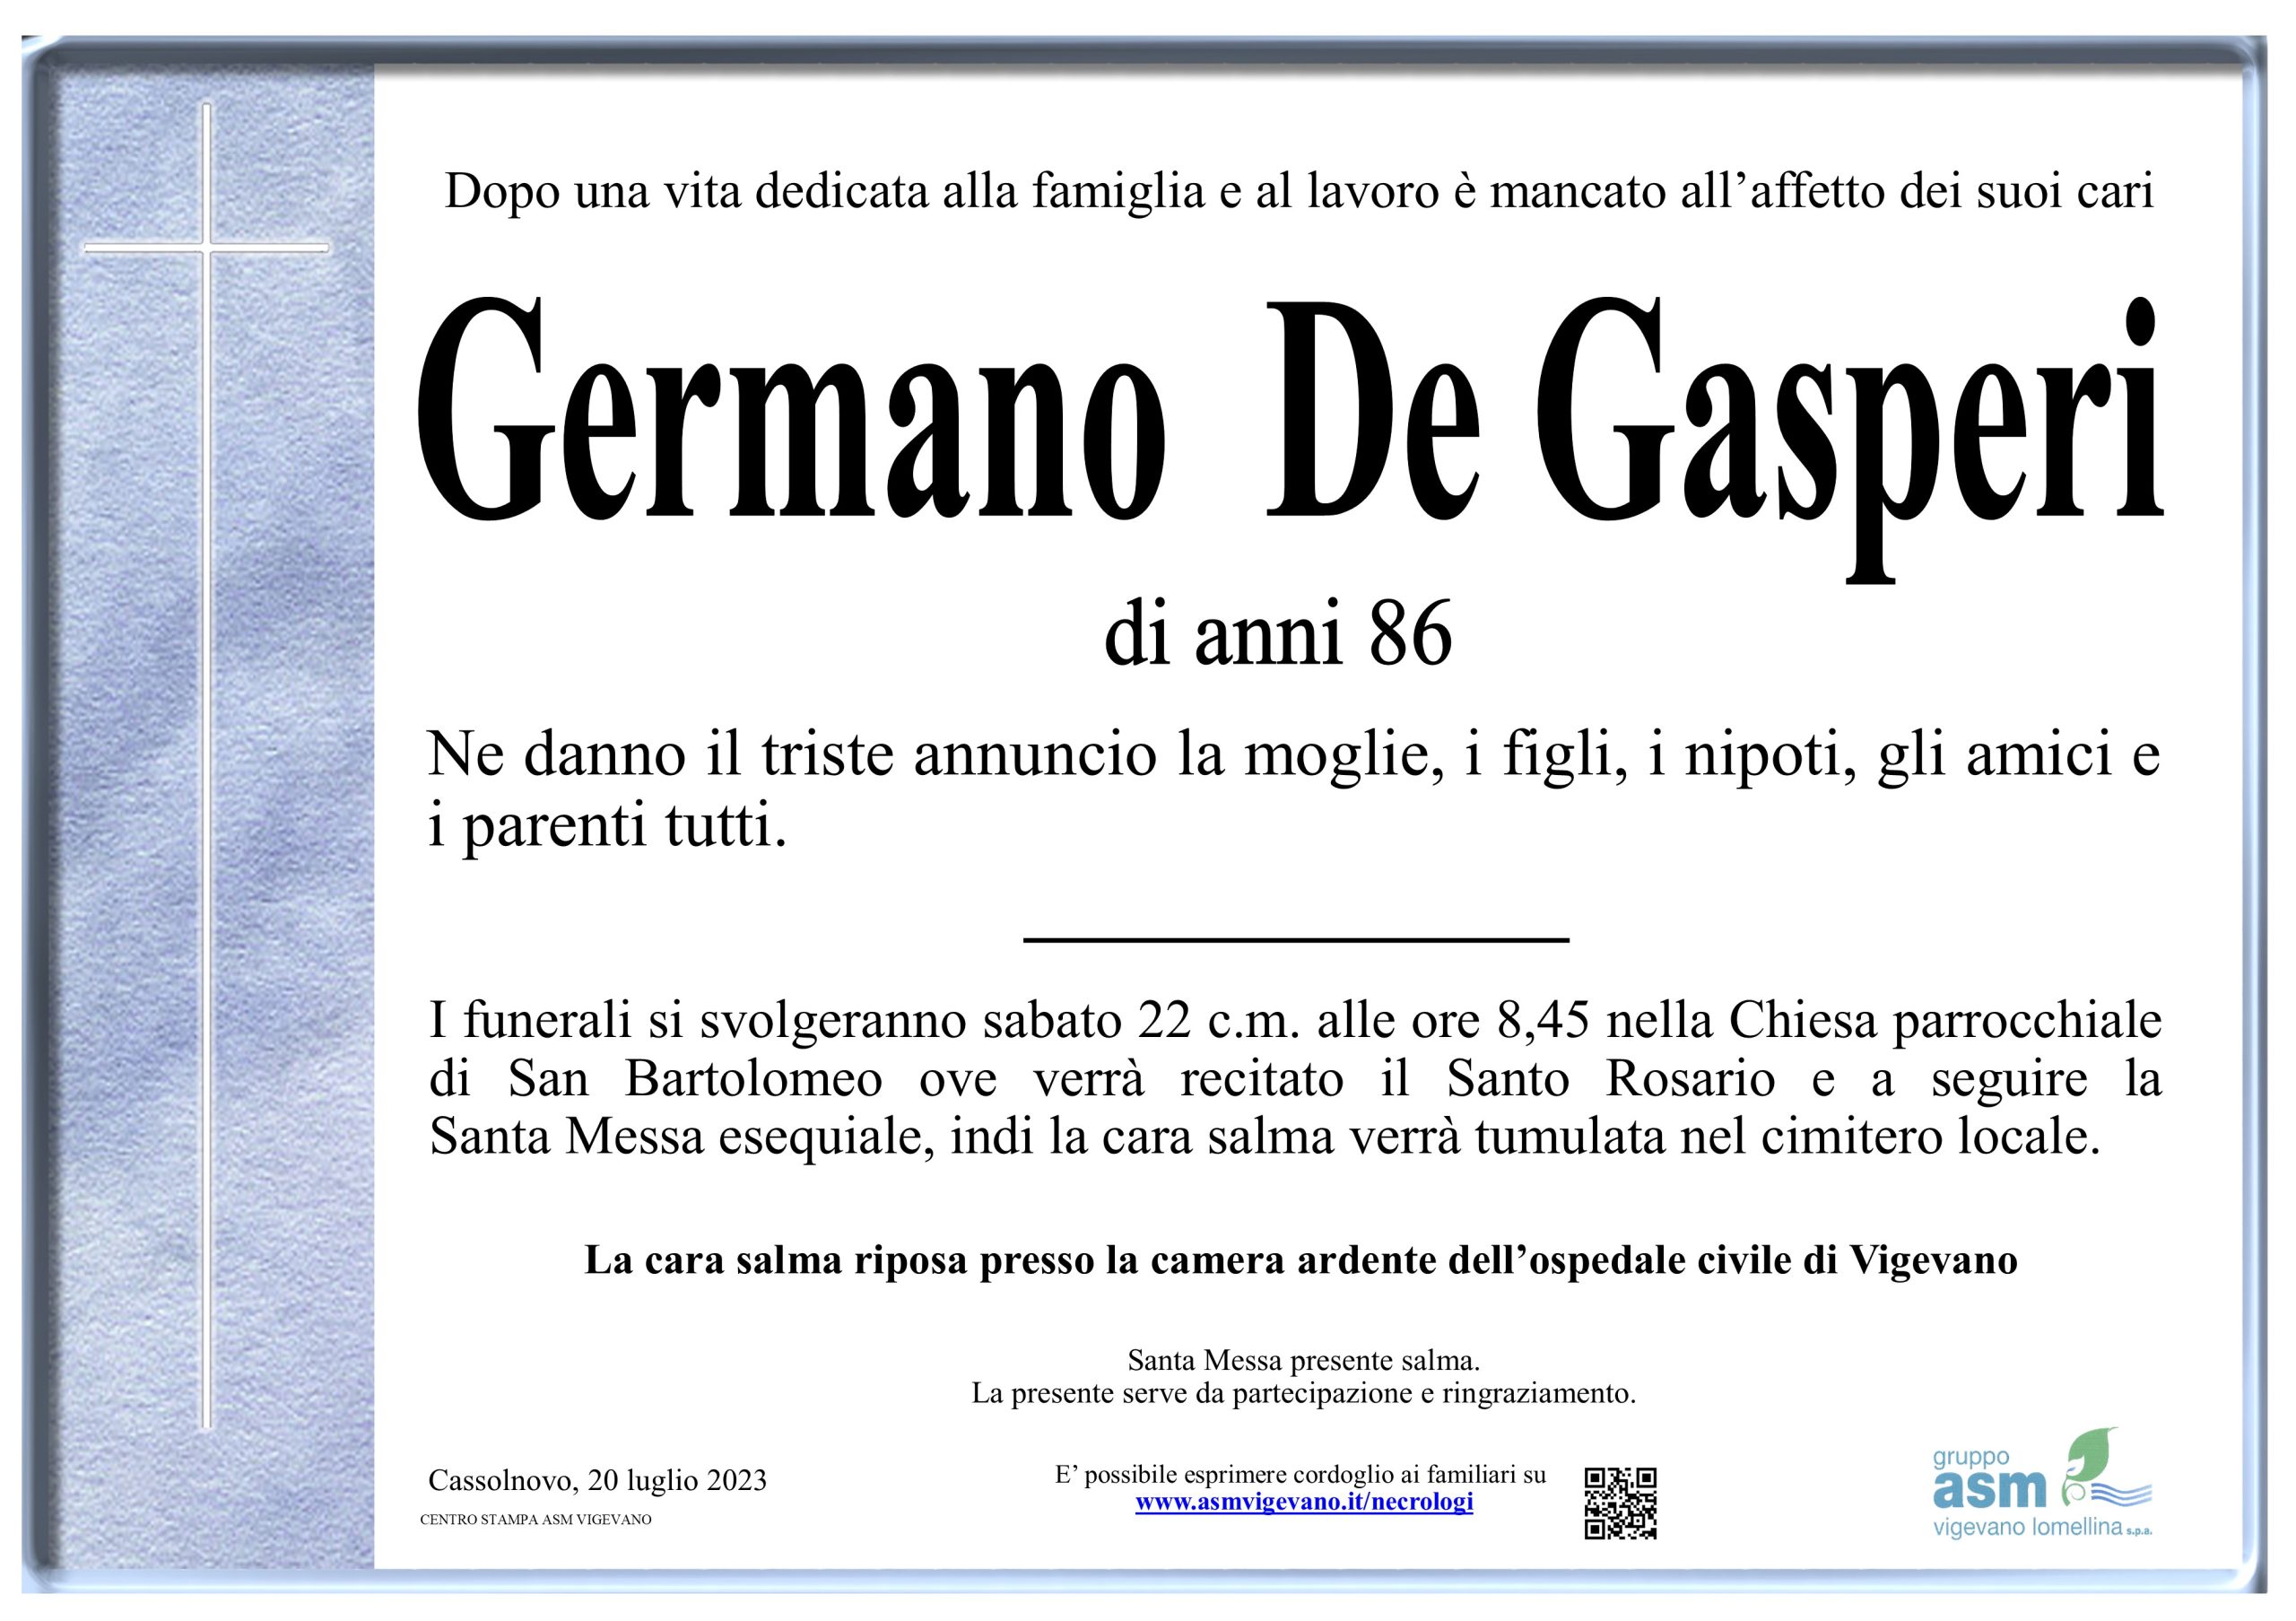 Germano De Gasperi